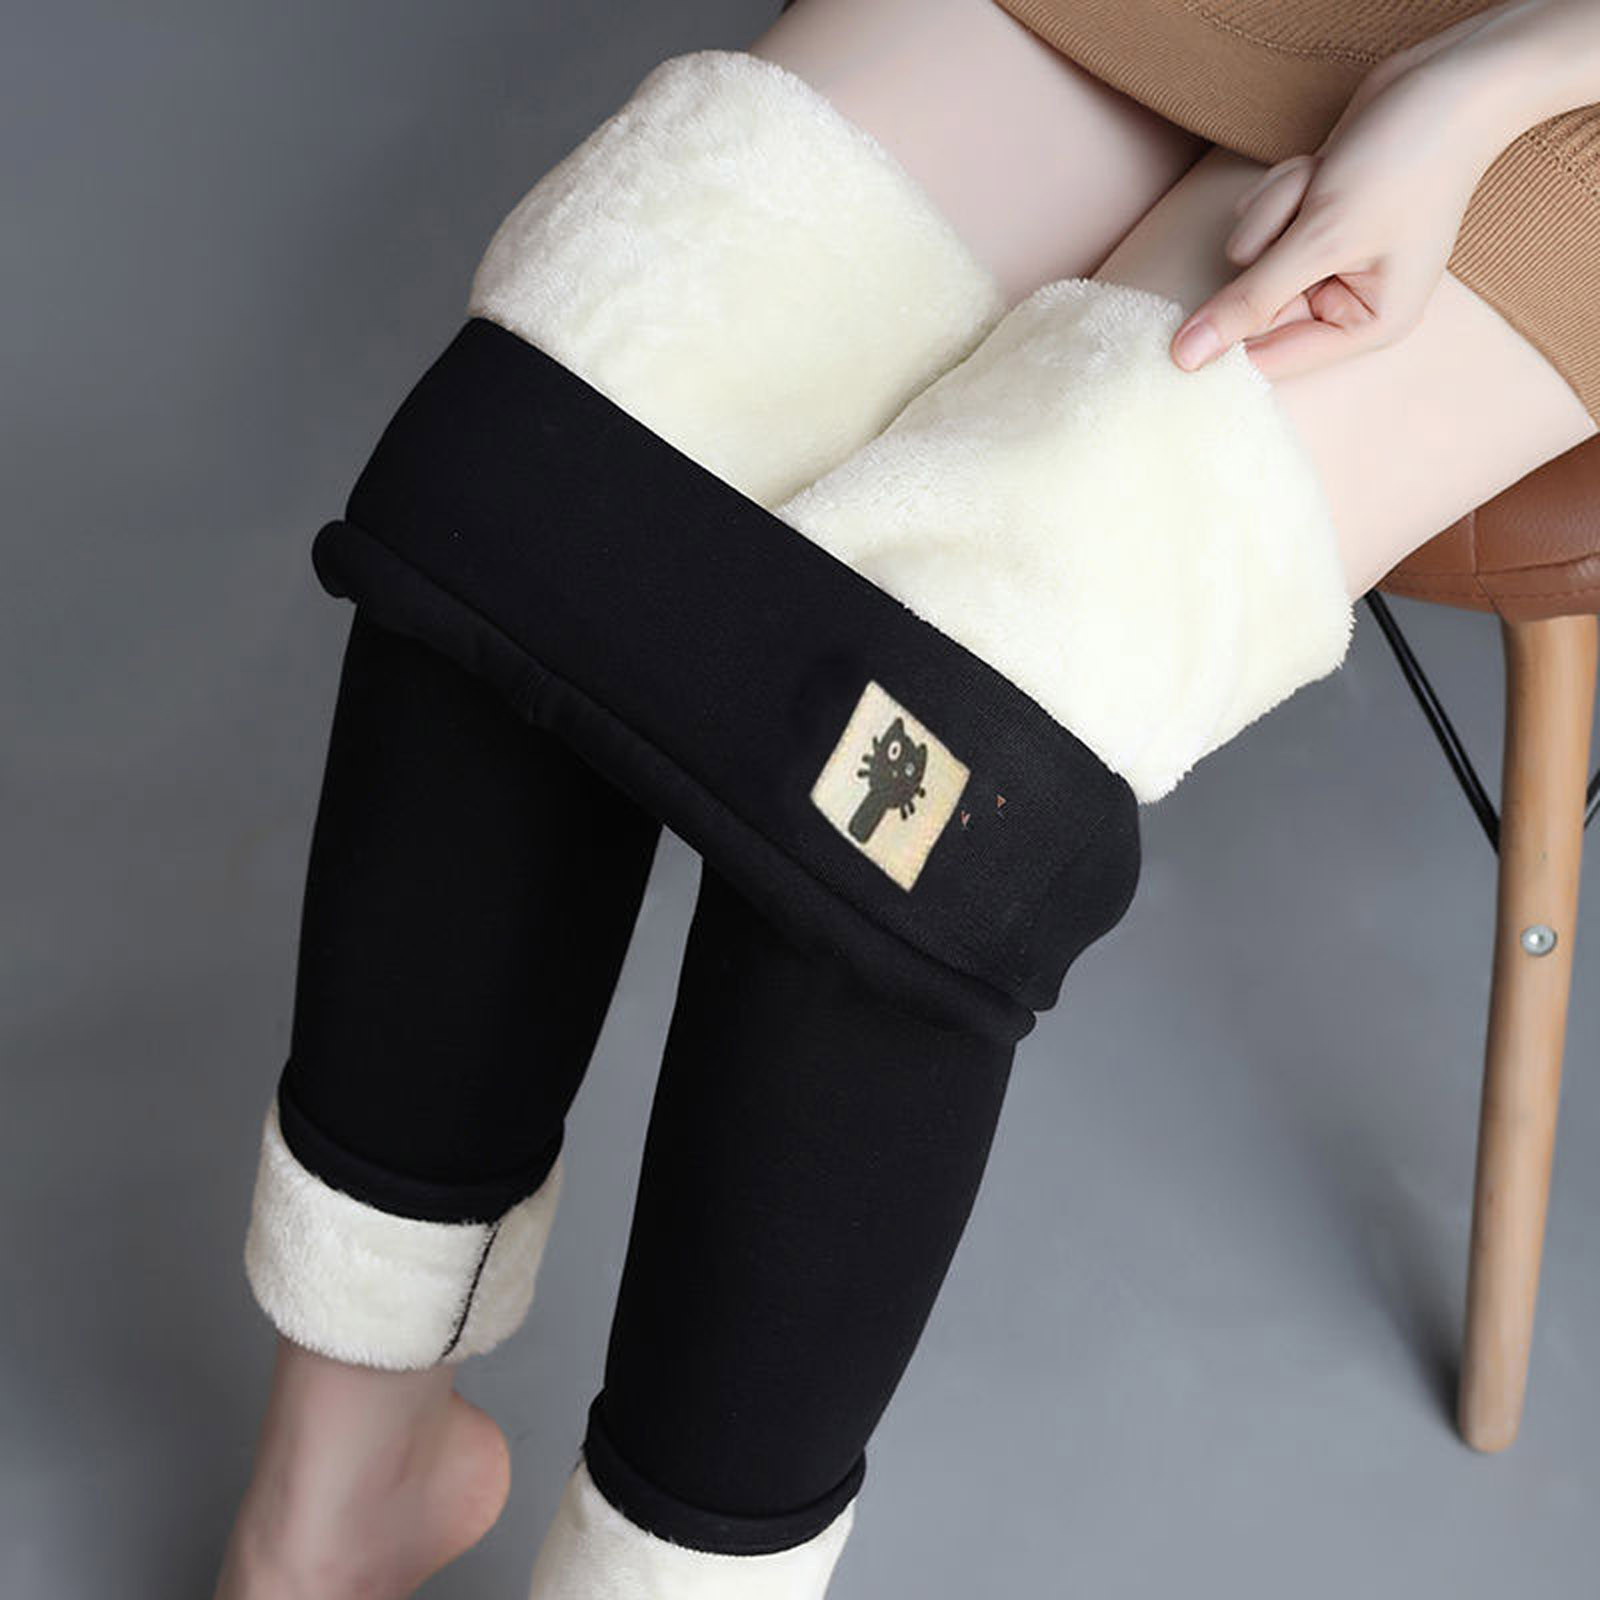 New Year's Deals!Aimik Super Thick Cashmere Leggings, Cashmere Wool Leggings, Premium Women's Fleece Lined Leggings - image 2 of 6